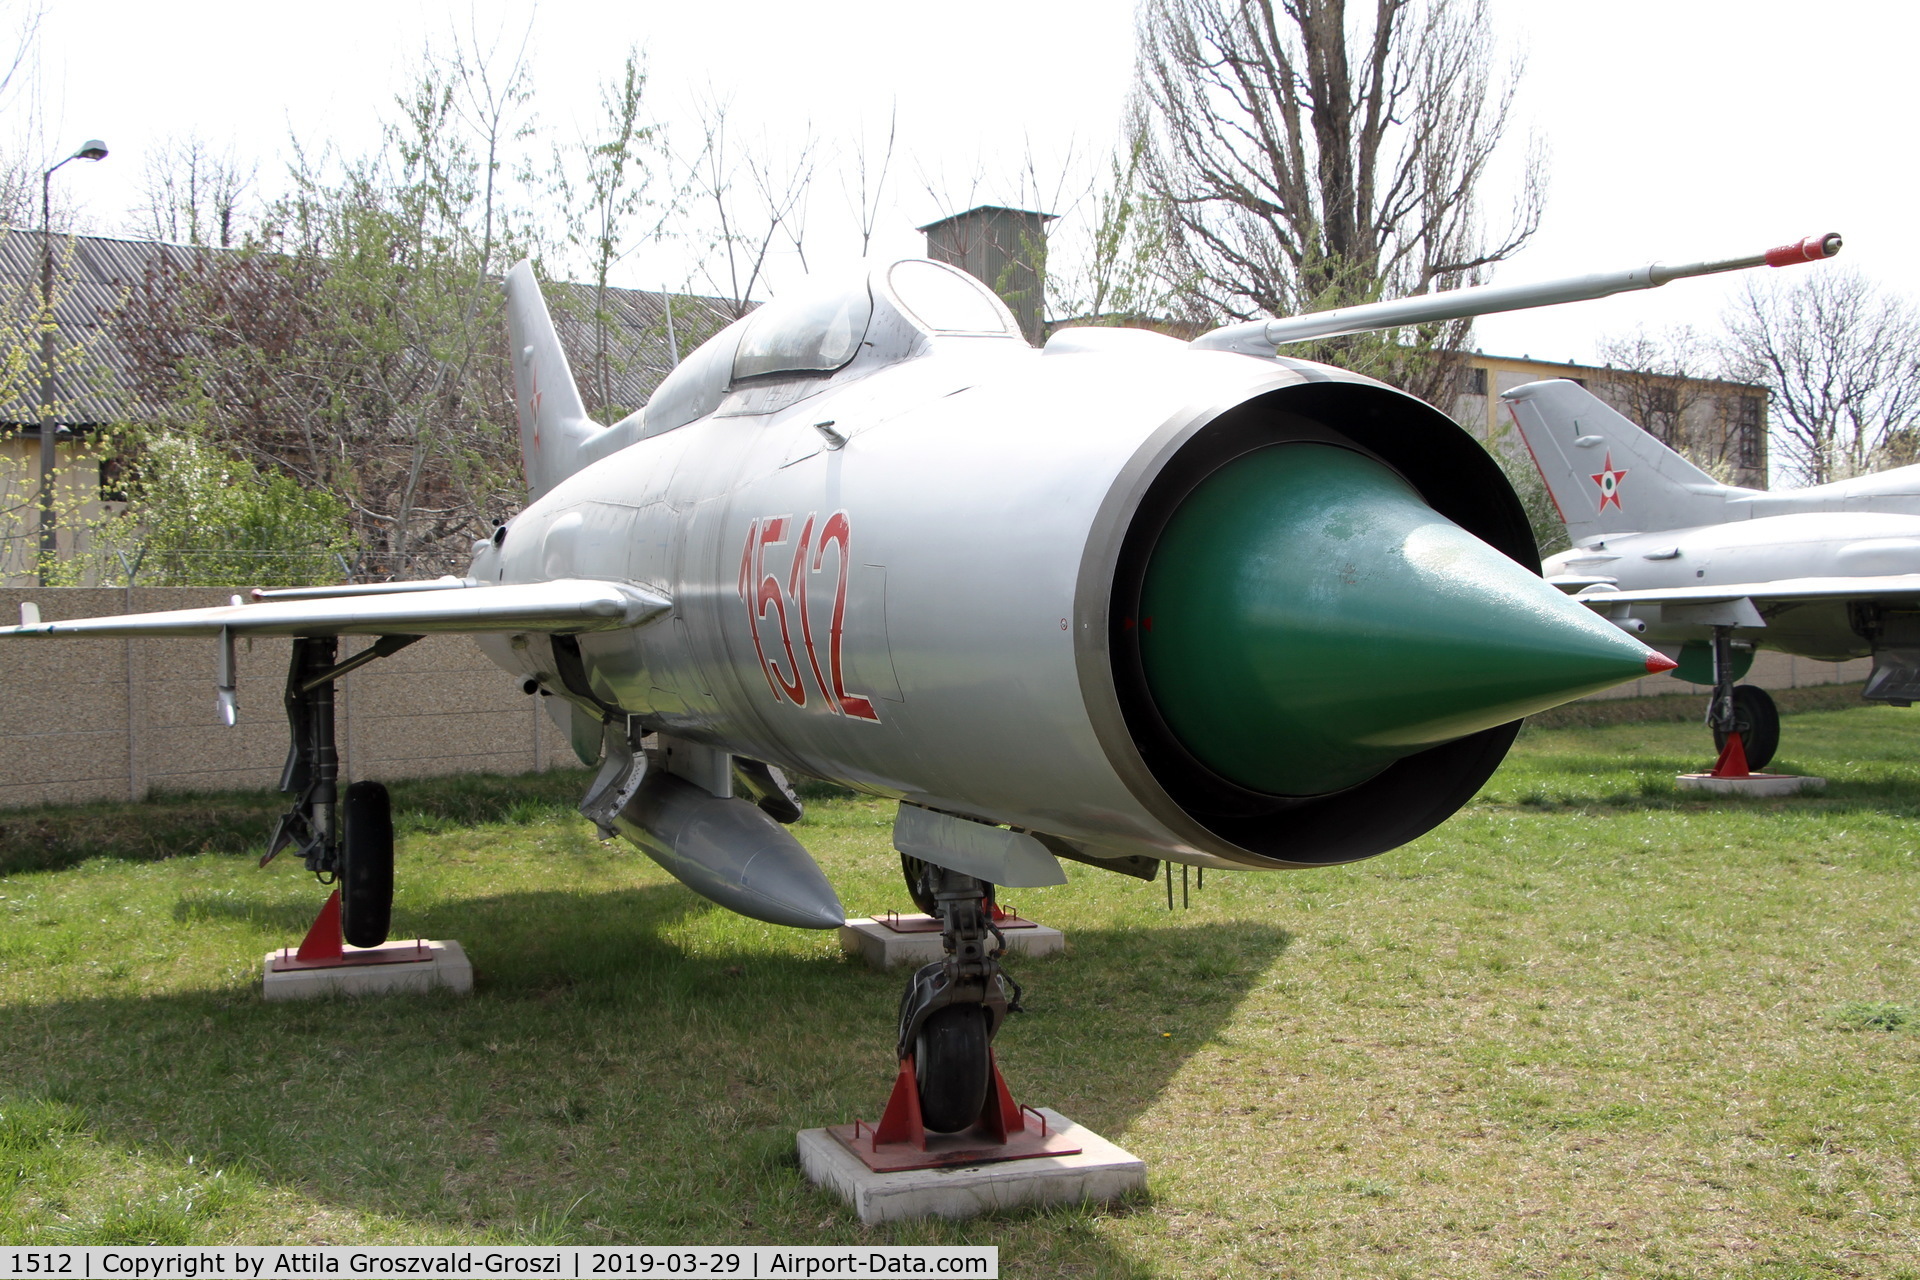 1512, 1965 Mikoyan-Gurevich MiG-21PF C/N 761512, RepTár. Szolnok aviation history museum, Hungary